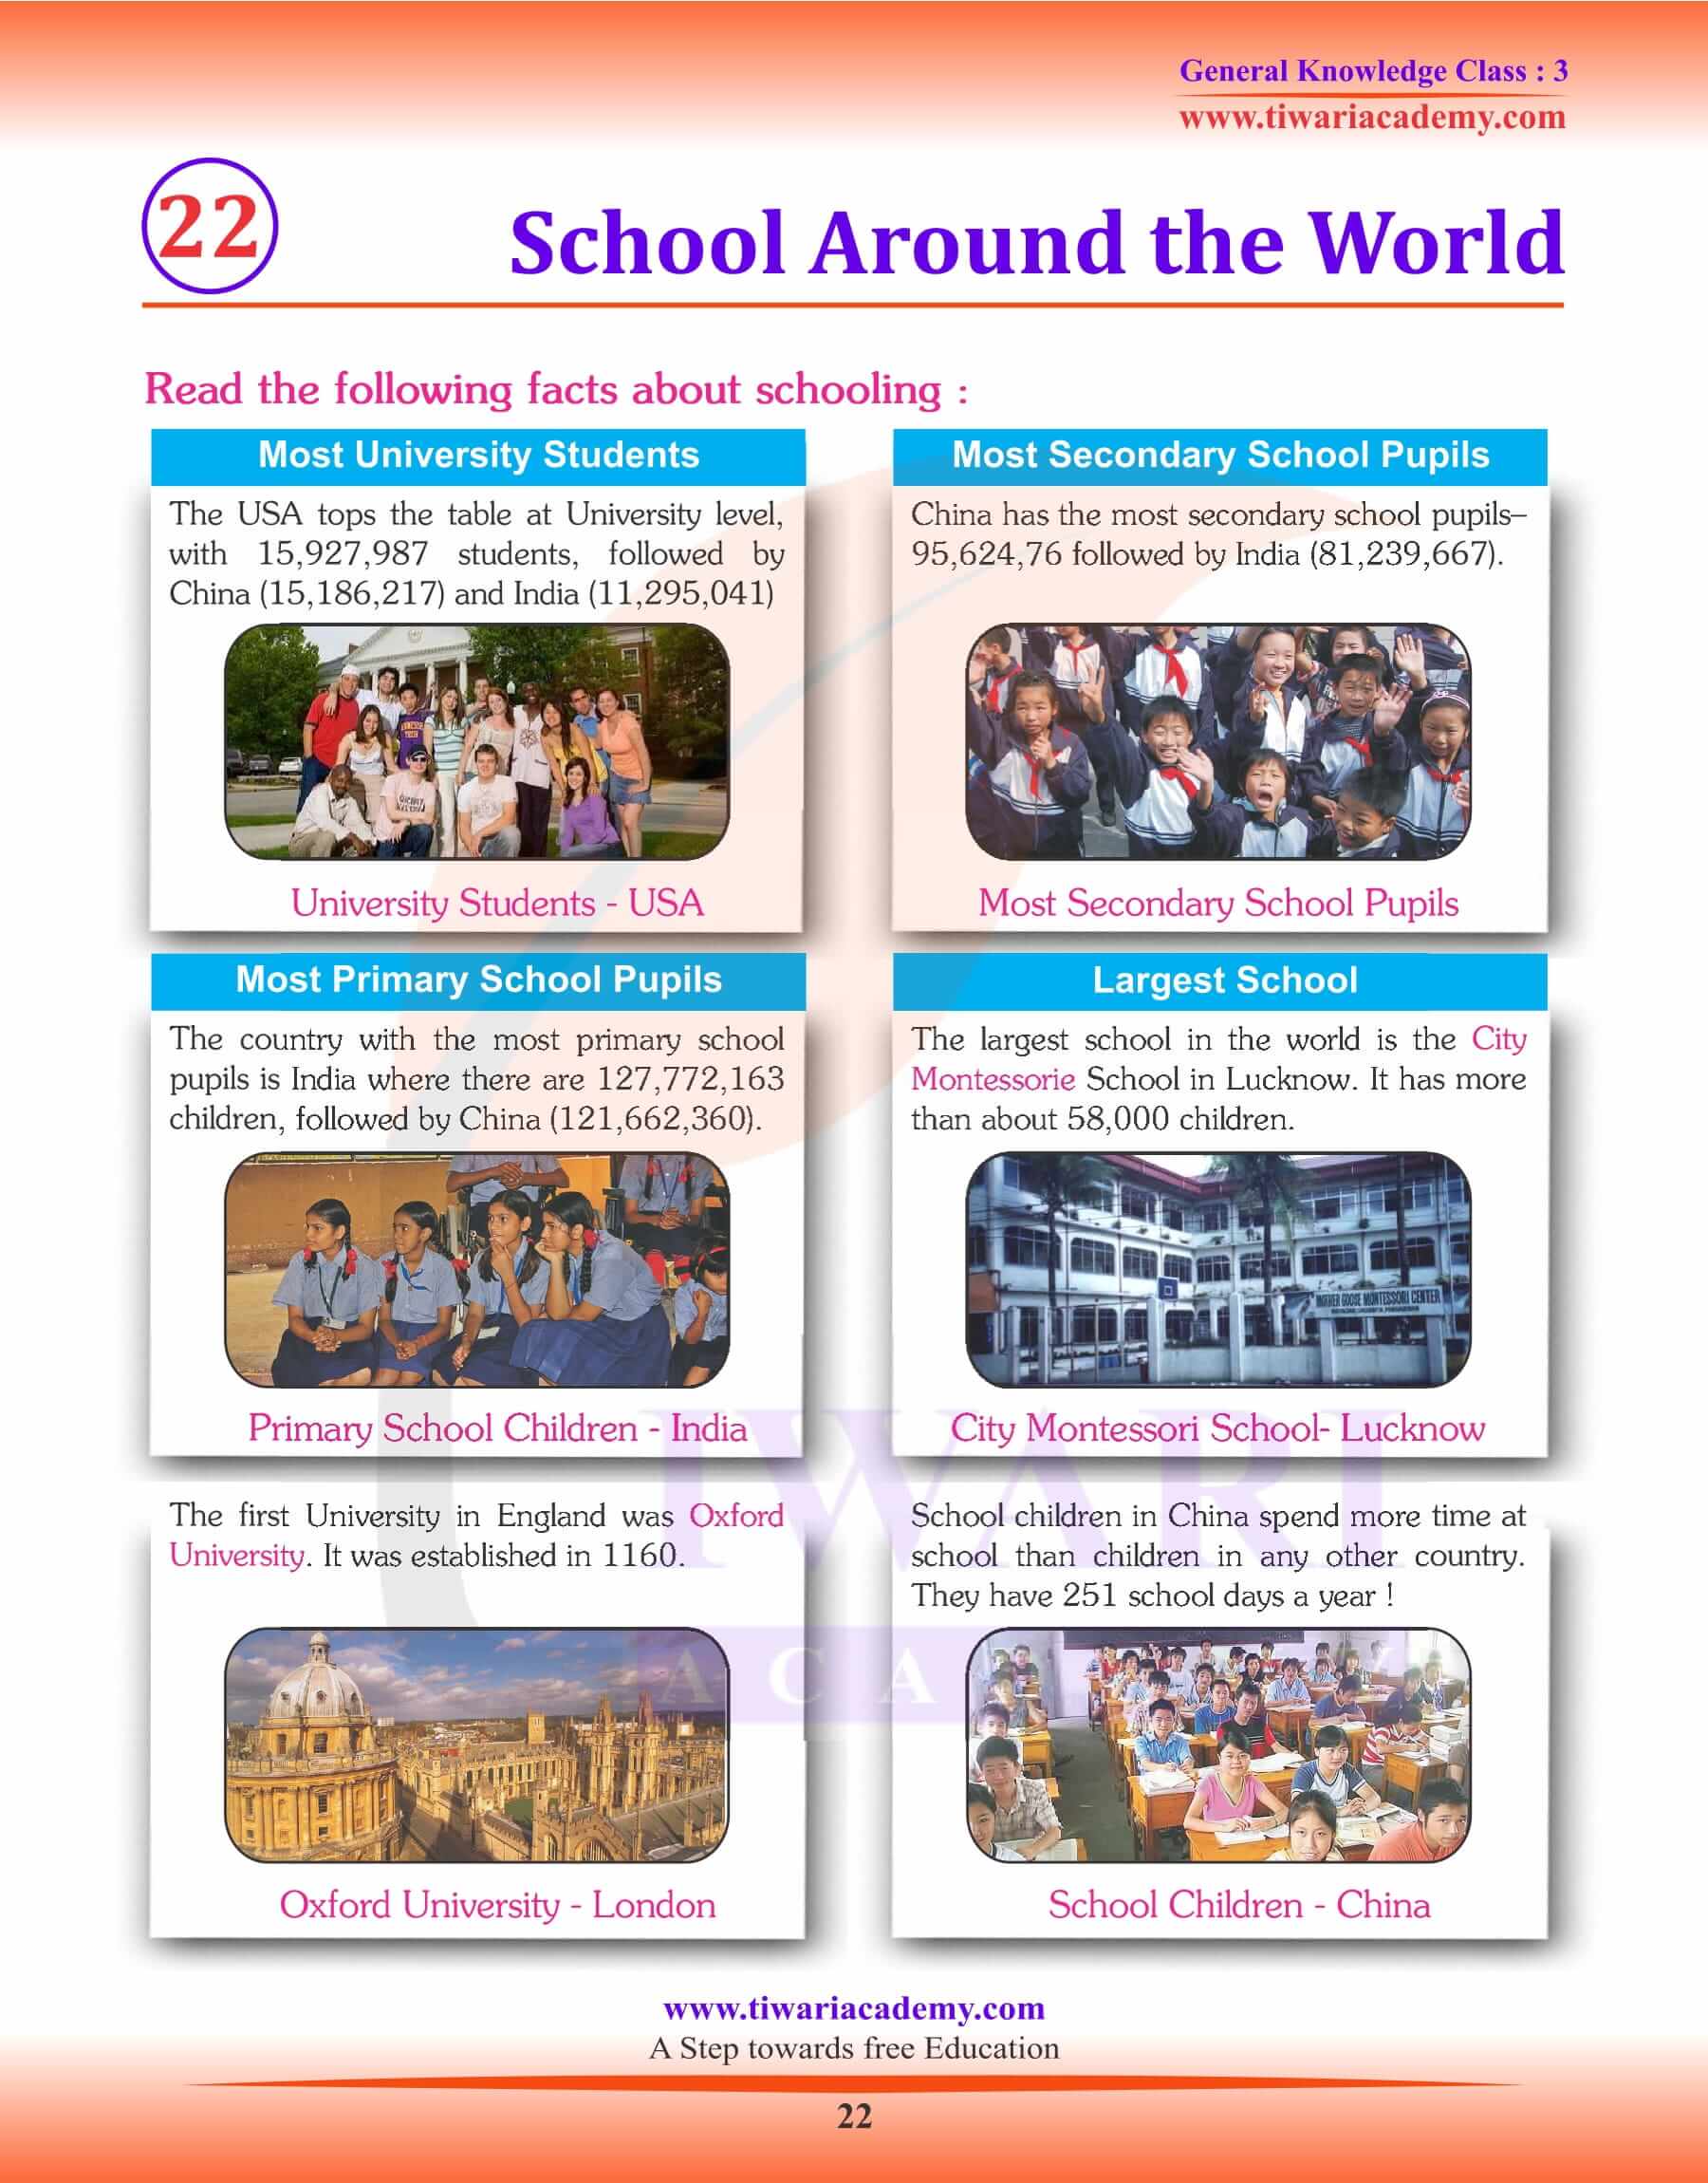 School around the World